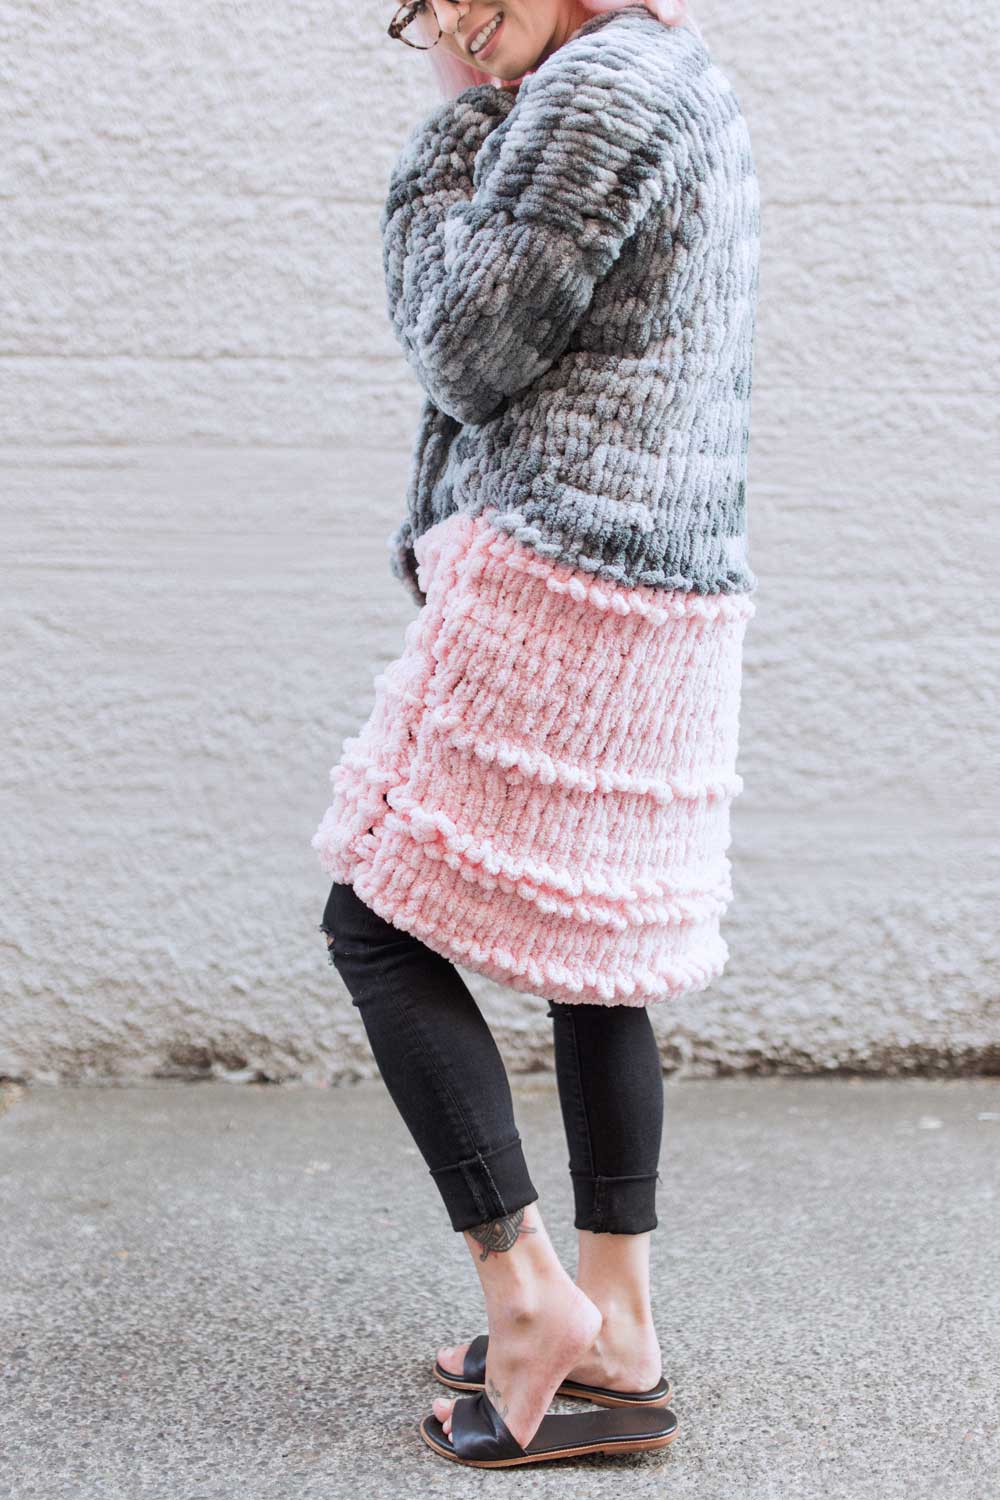 Beautiful Yarn Sweater Making Idea For Winters